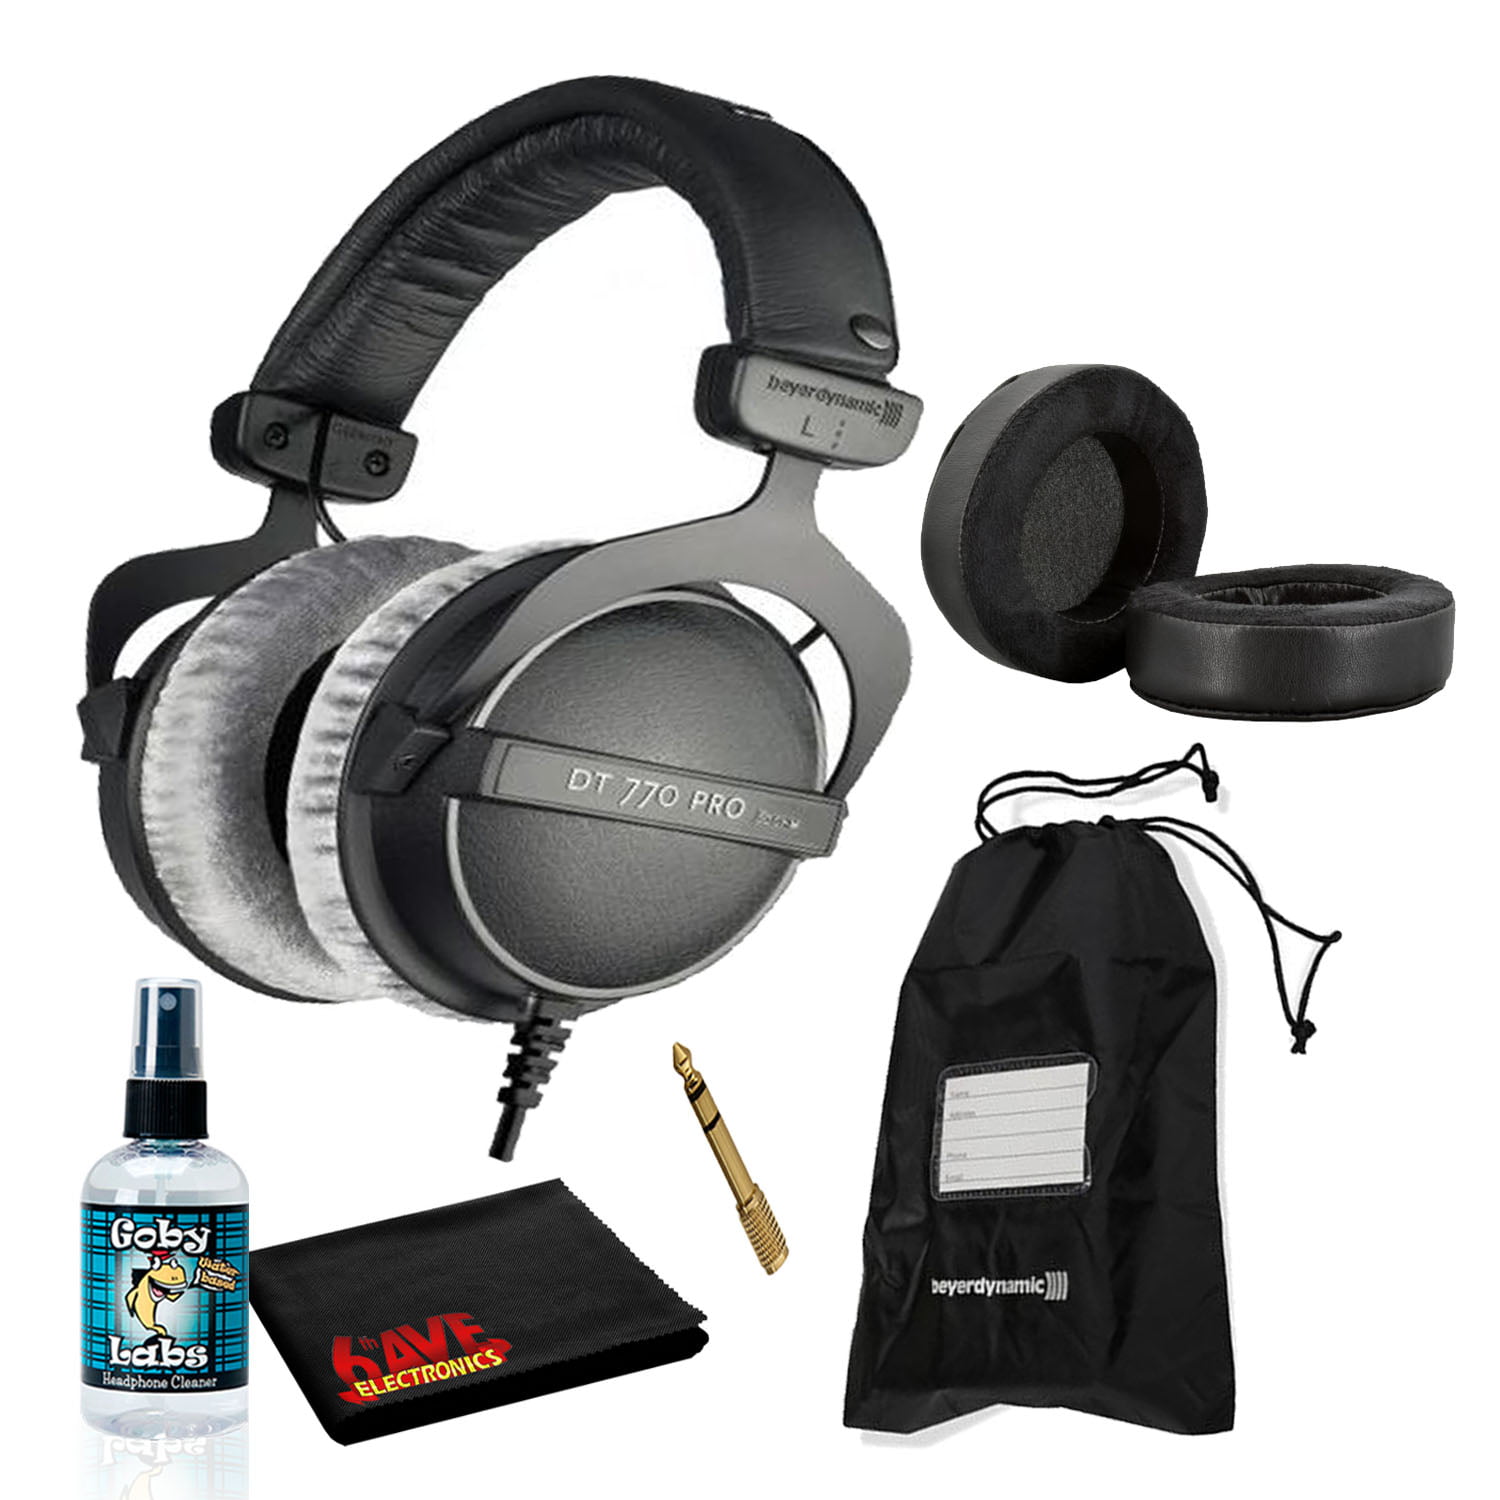 Beyerdynamic DT 770 Pro Closed-Back Studio Mixing Headphones 80 Ohm Bundle with Dekoni Audio Choice Hybrid Earpads, Soft Case, and 6AVE Headphone Cleaning Kit Walmart.com